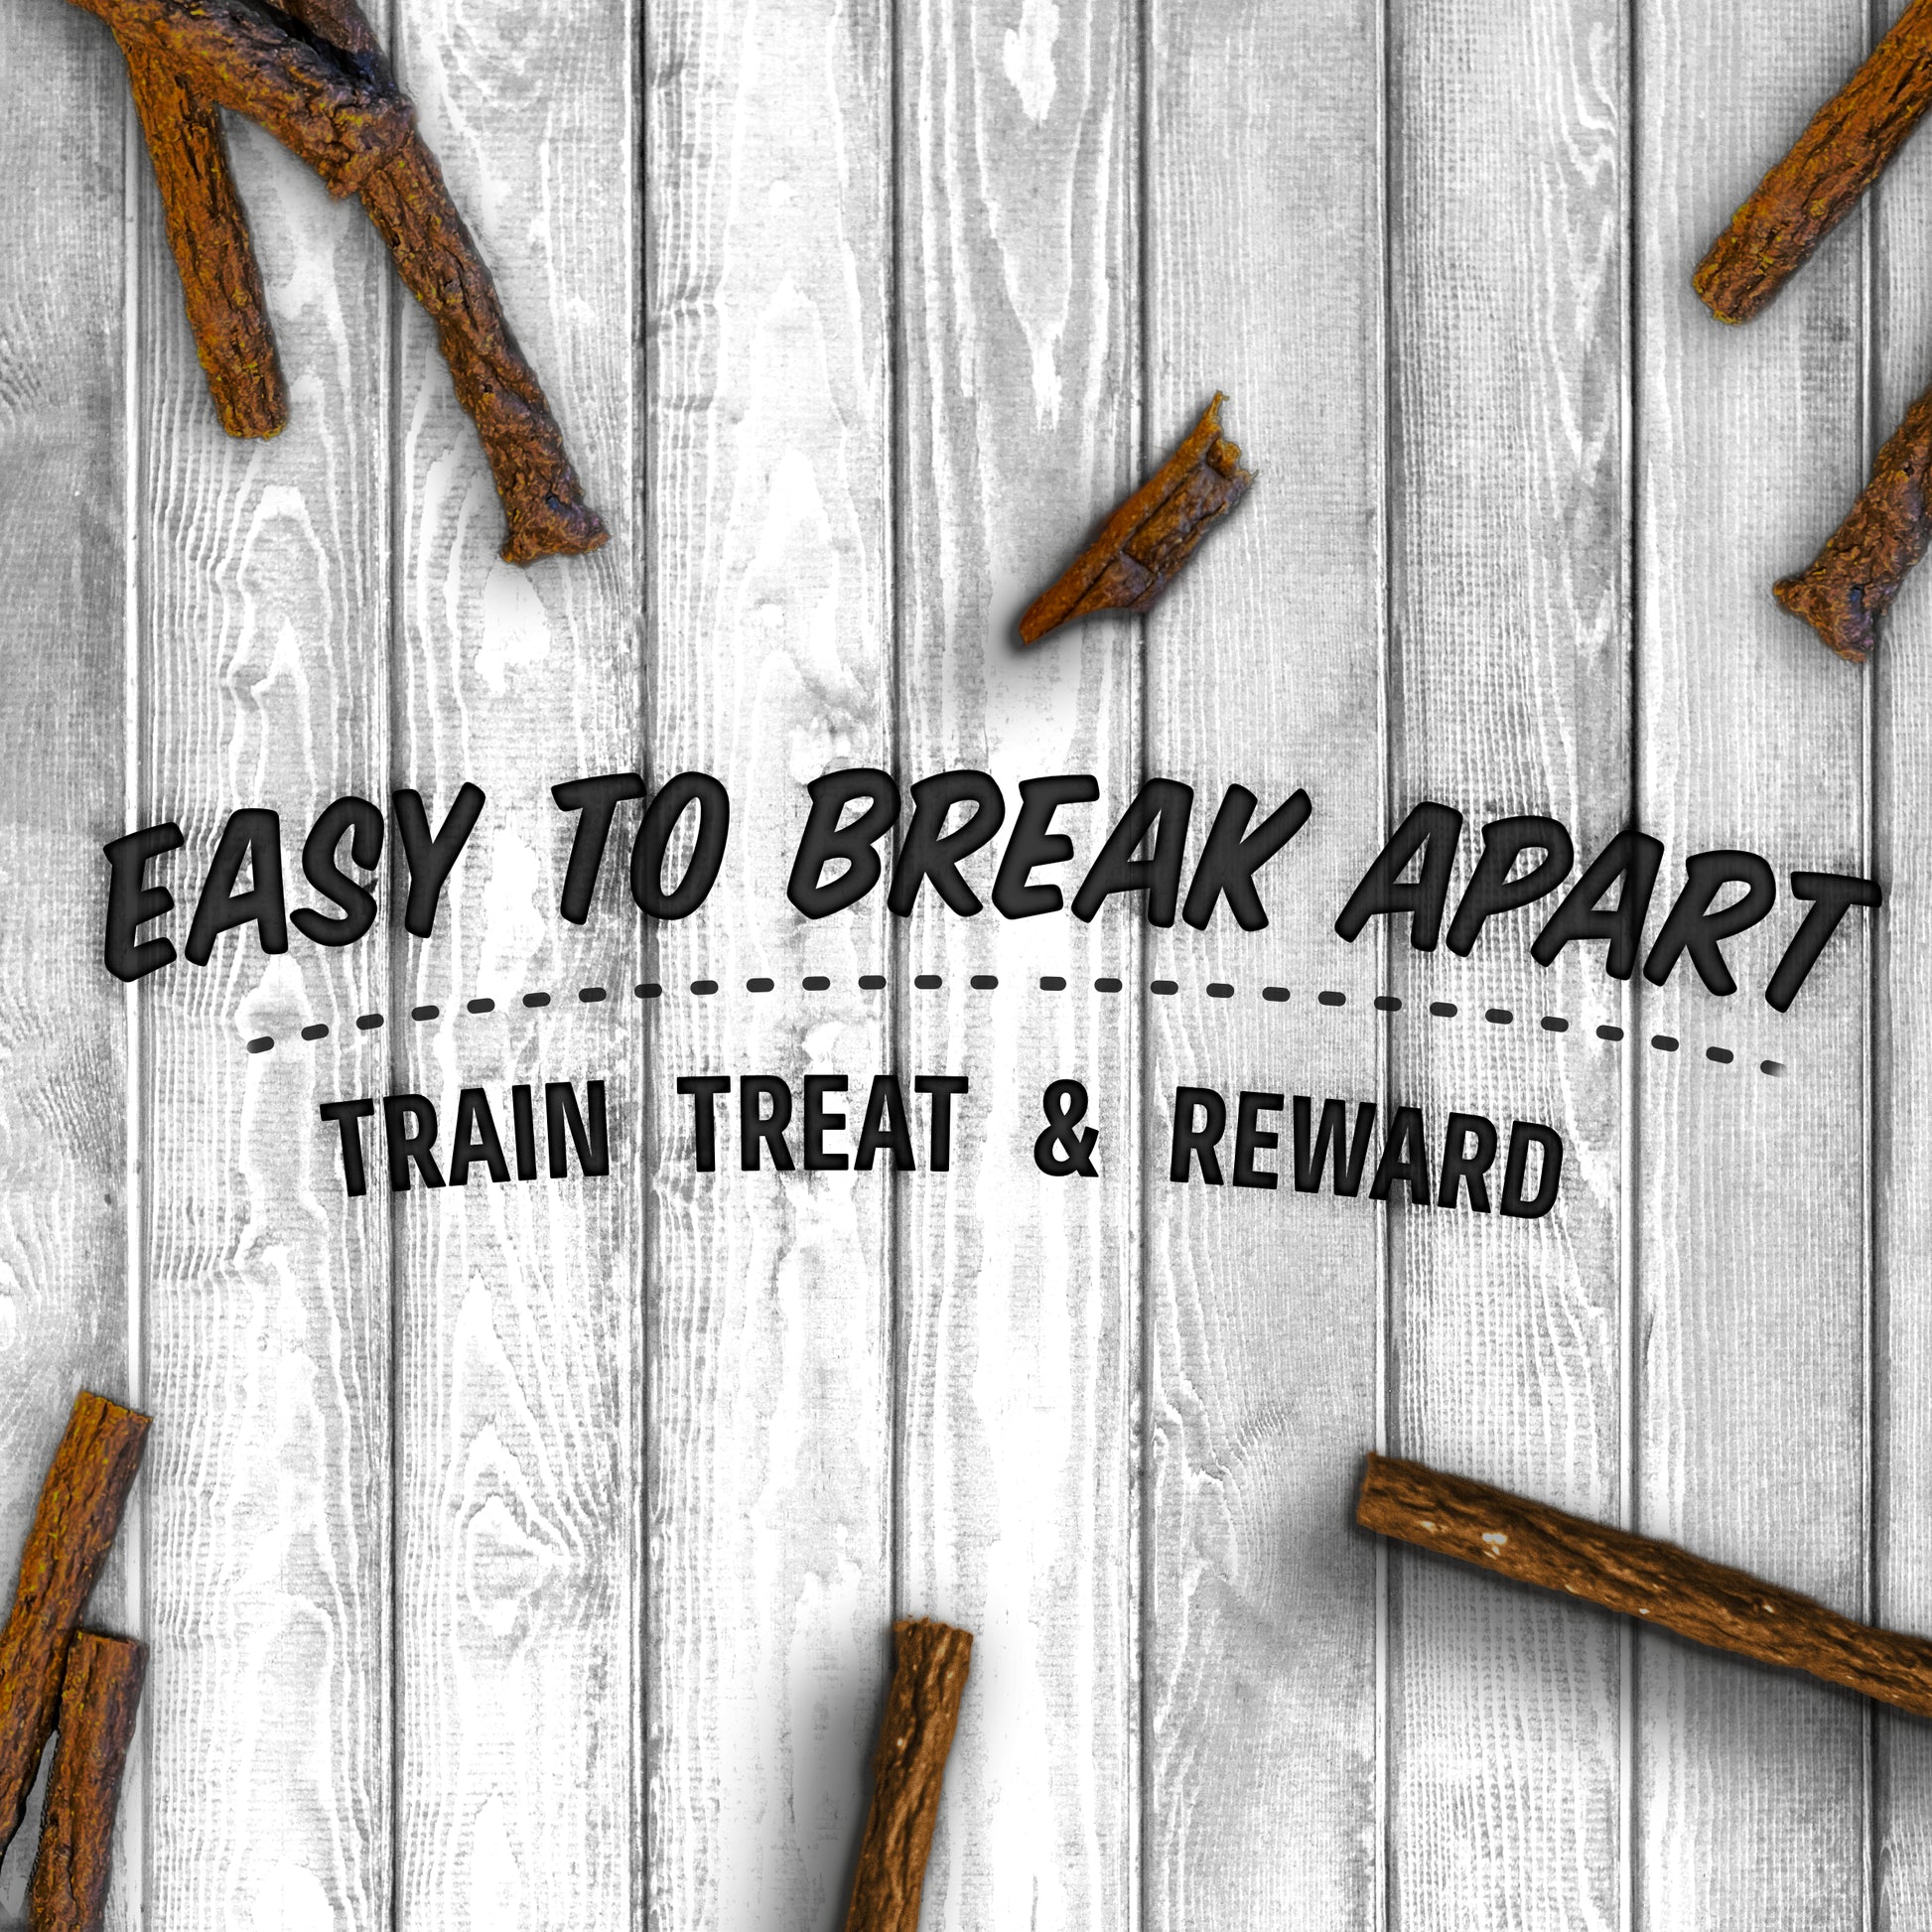 tricksters broken apart over white wood background. "easy to break apart"